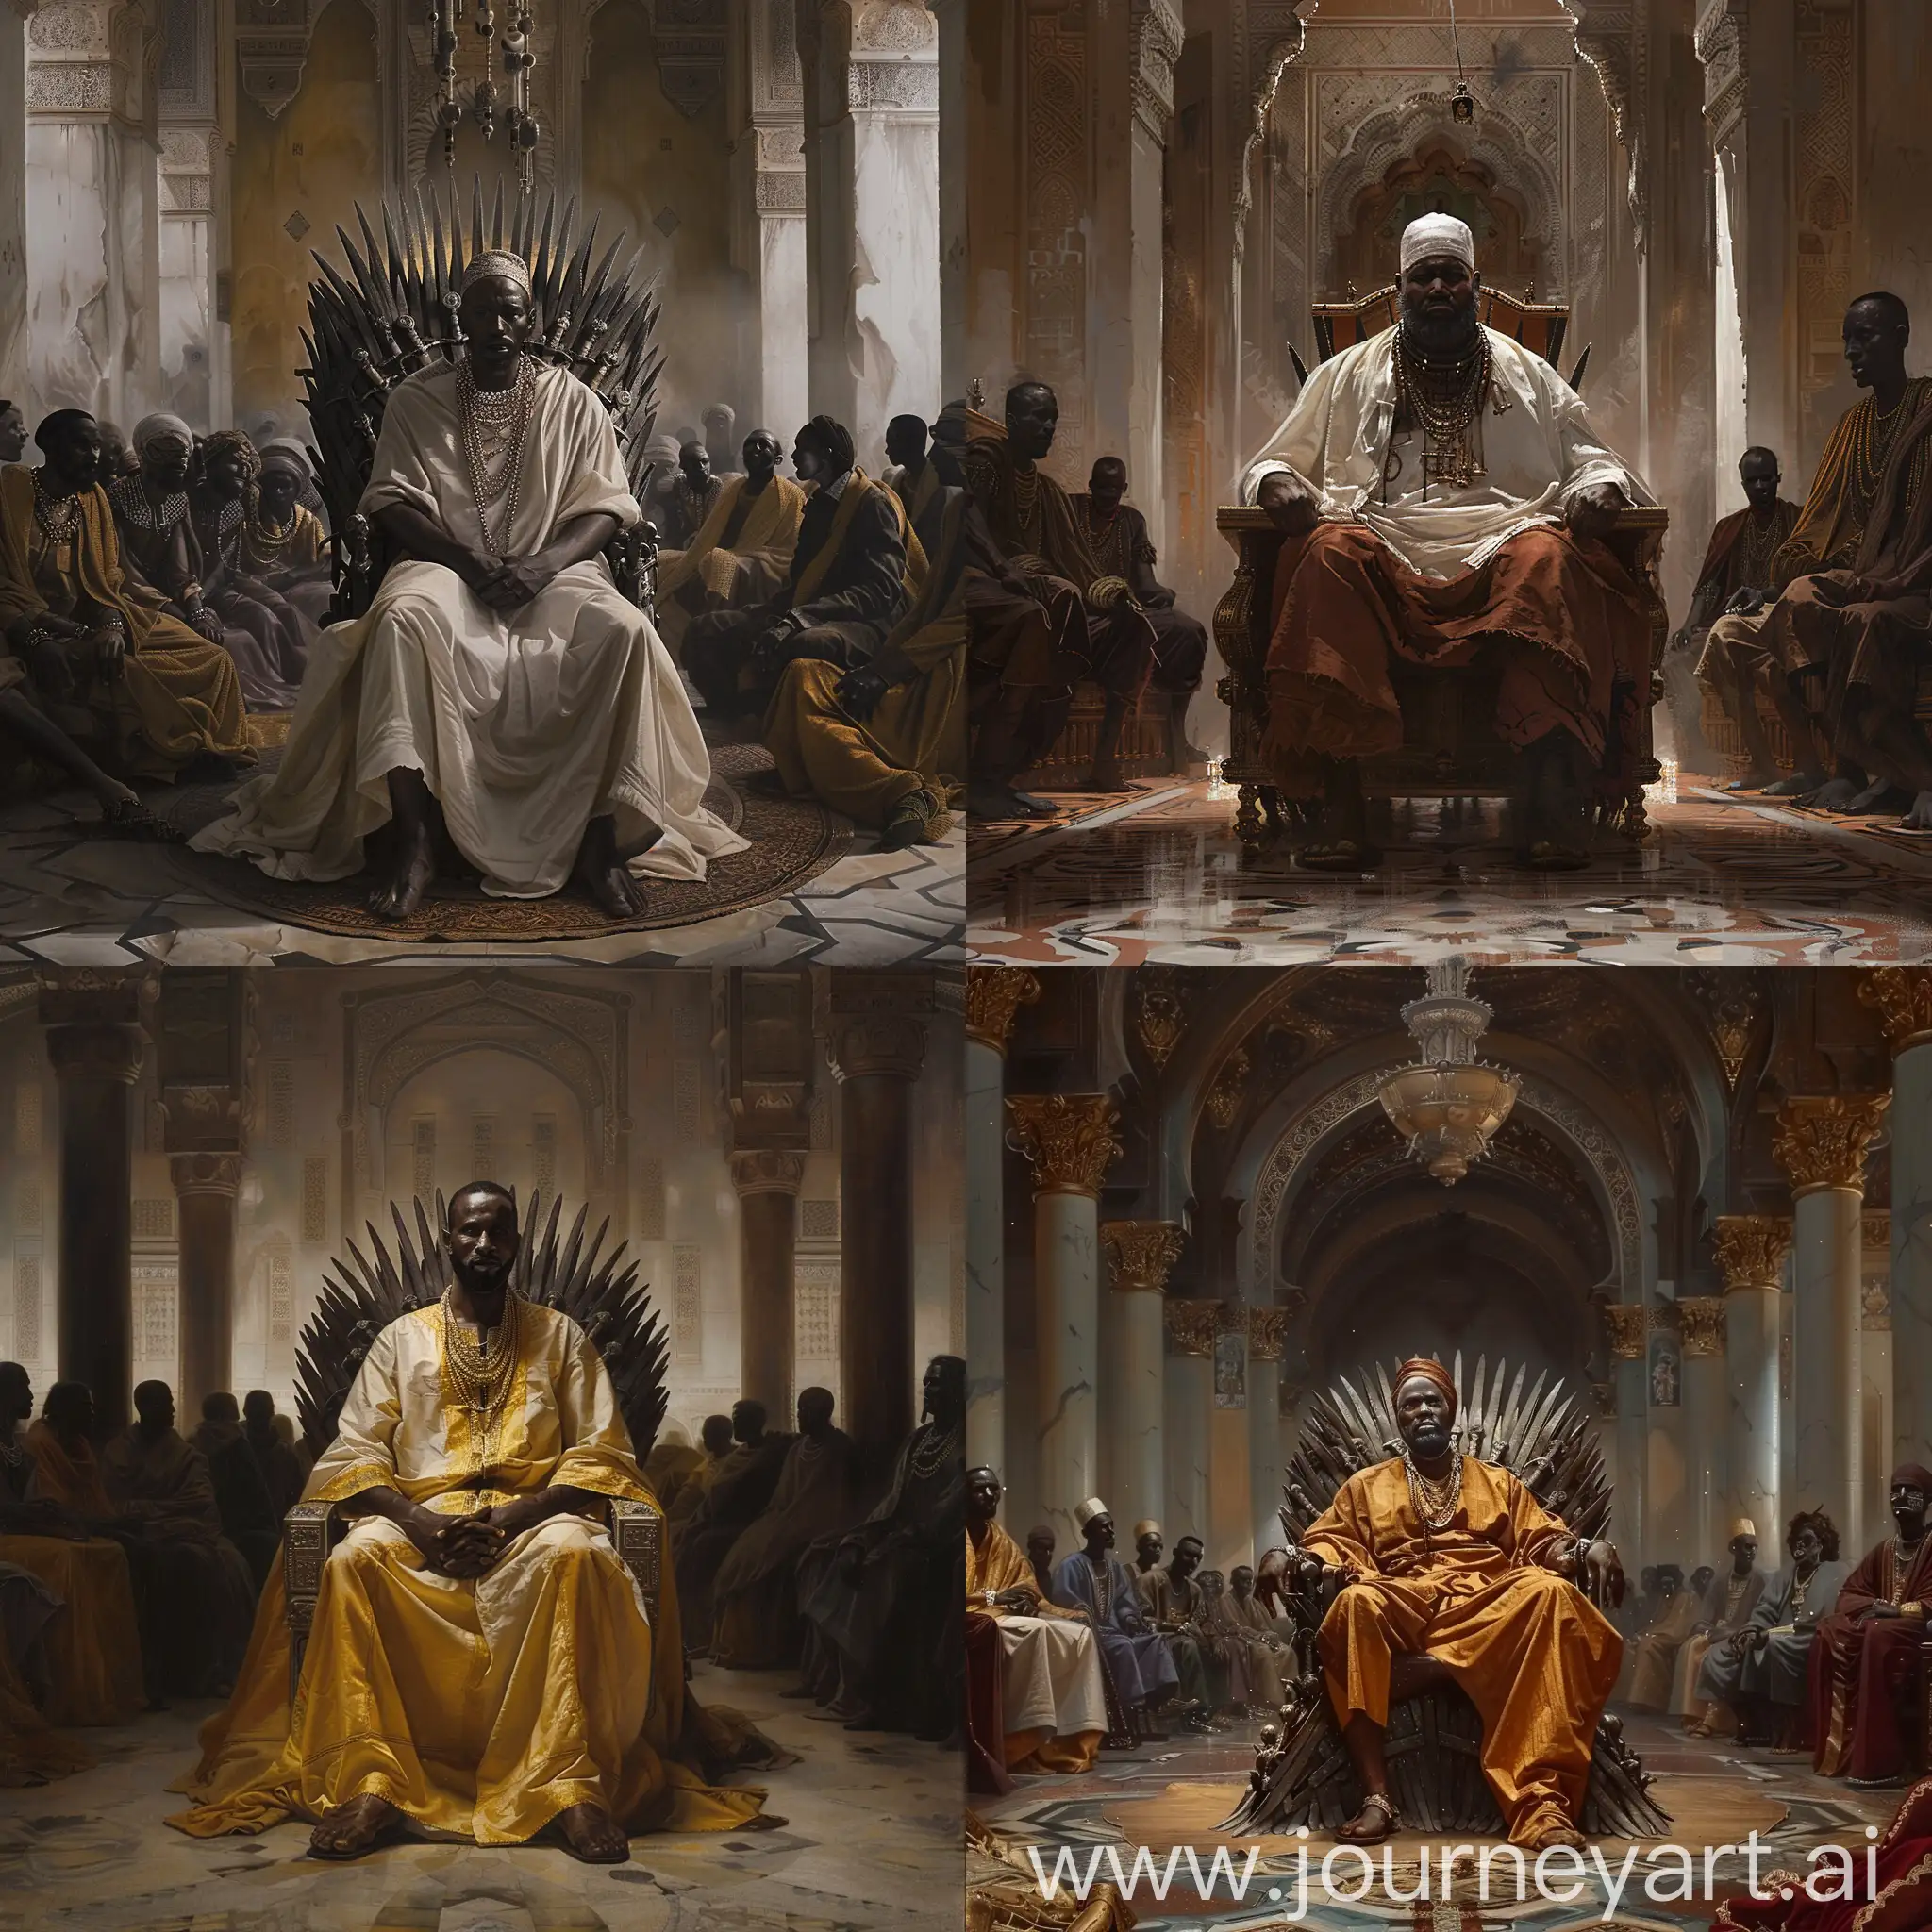 Sudanese-Man-Mosaab-Abdalla-Reigns-in-Grand-Throne-Amidst-Dark-Period-Subjects